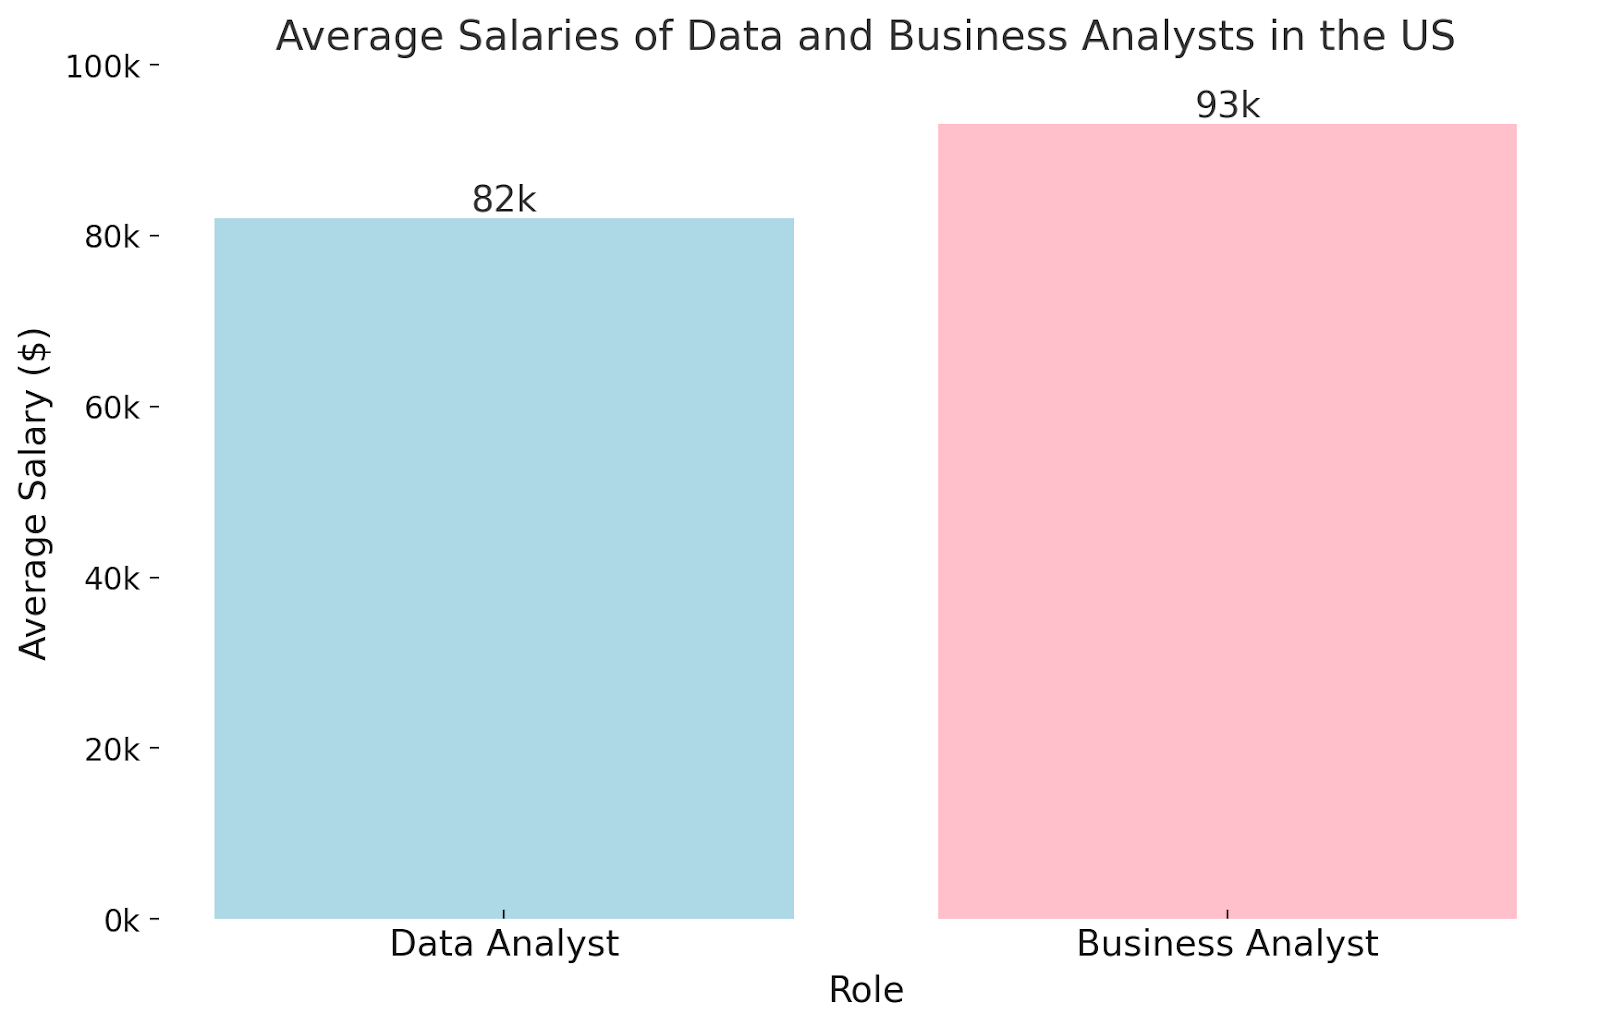 data analyst vs business analyst salaries